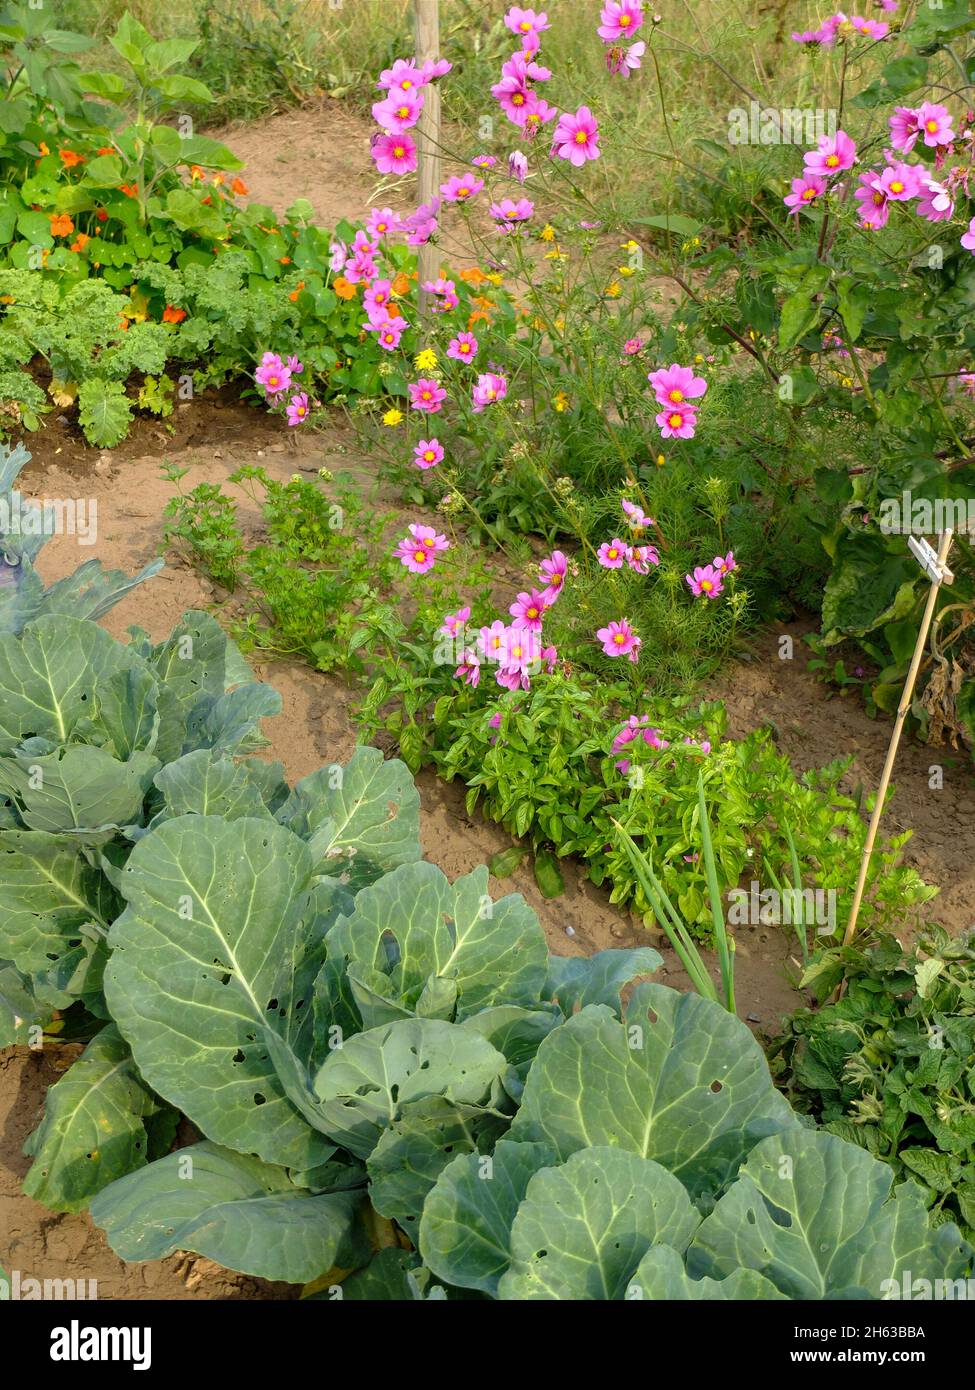 vegetable patch with herbs and flowers: cabbage (brassica),parsley (petroselinum crispum),basil (ocimum basilicum),cosmea,nasturtium (tropaeolum) Stock Photo